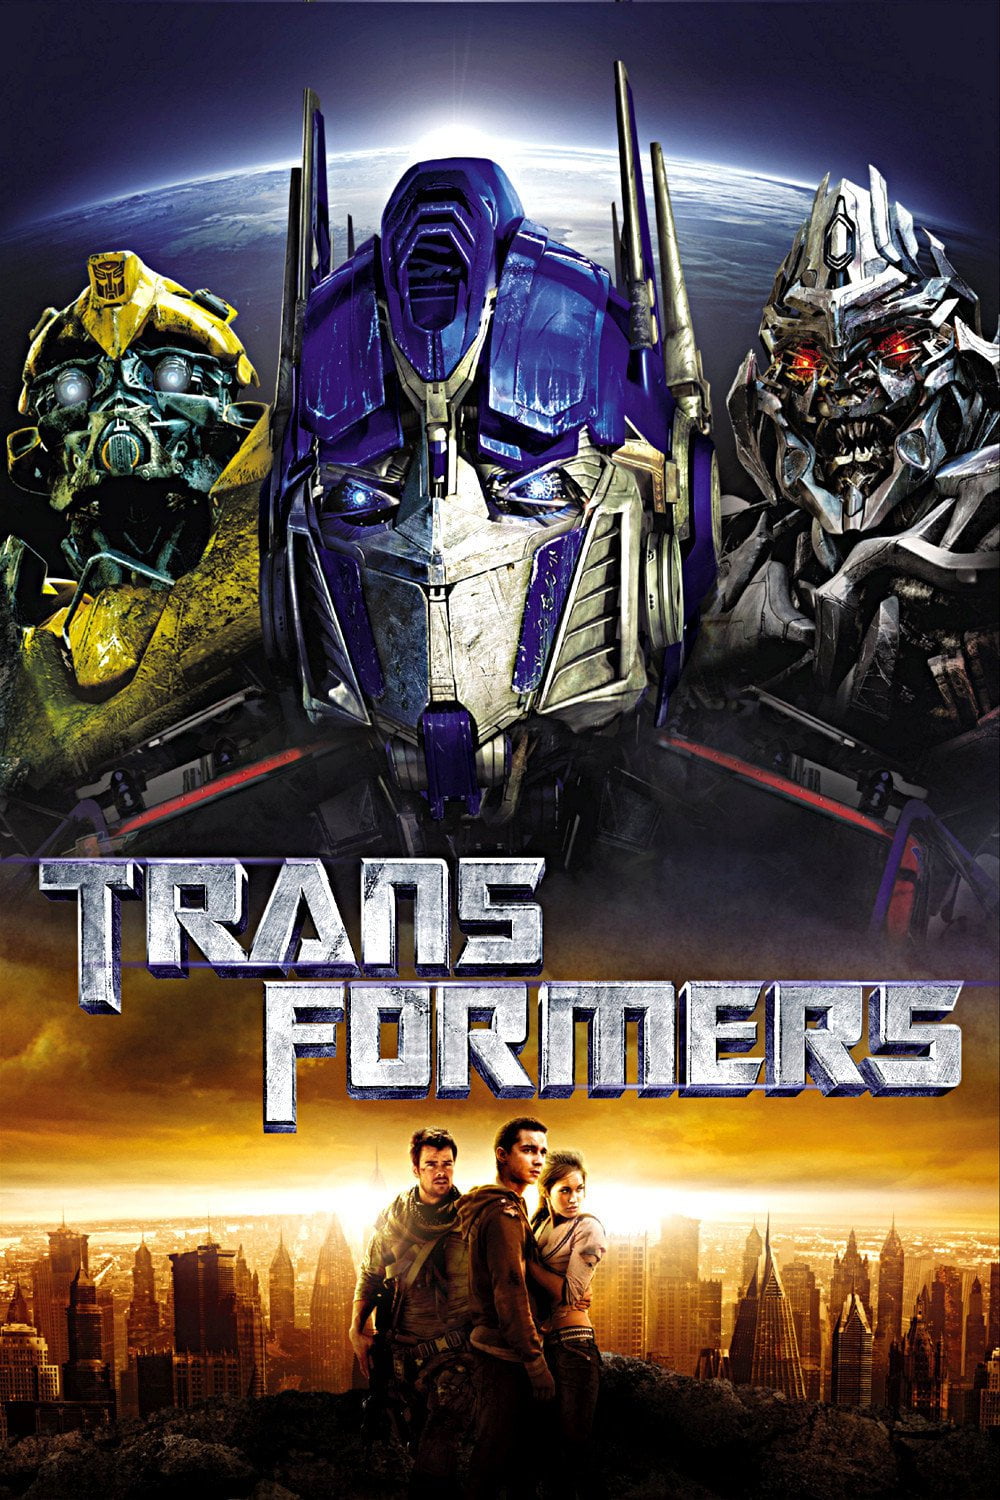 Poster for the filmen "Transformers"